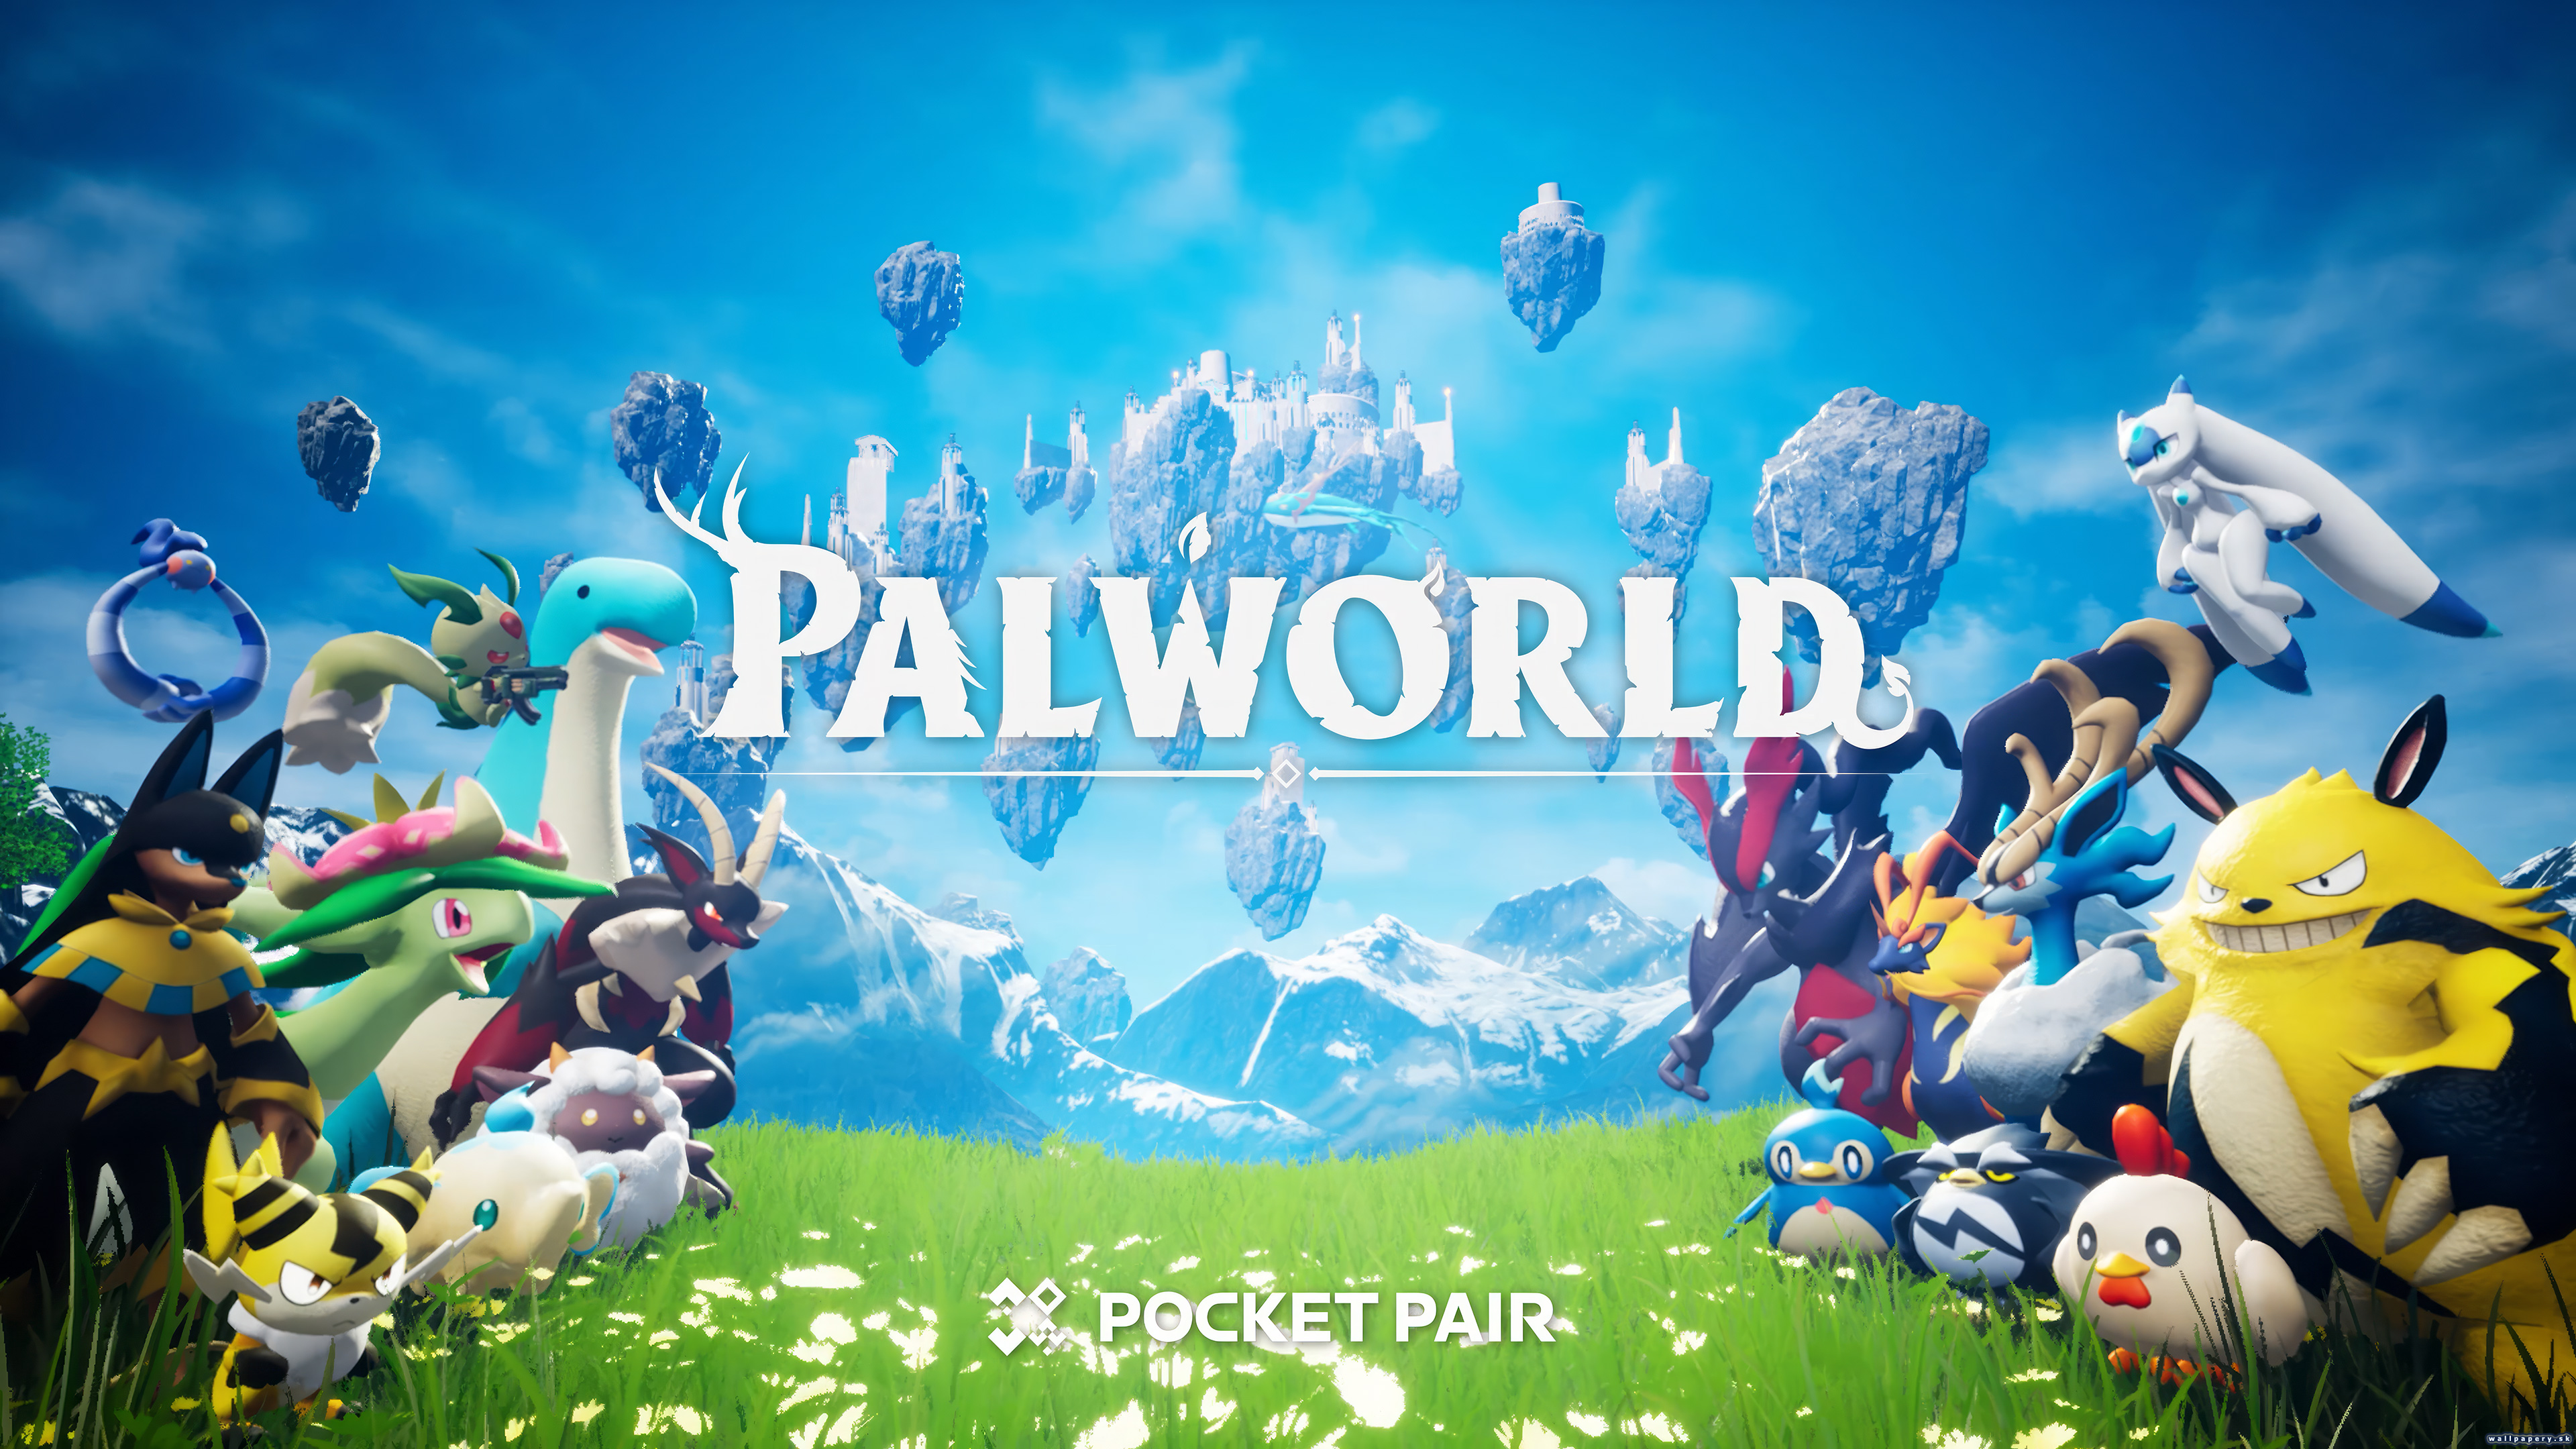 Palworld - wallpaper 1